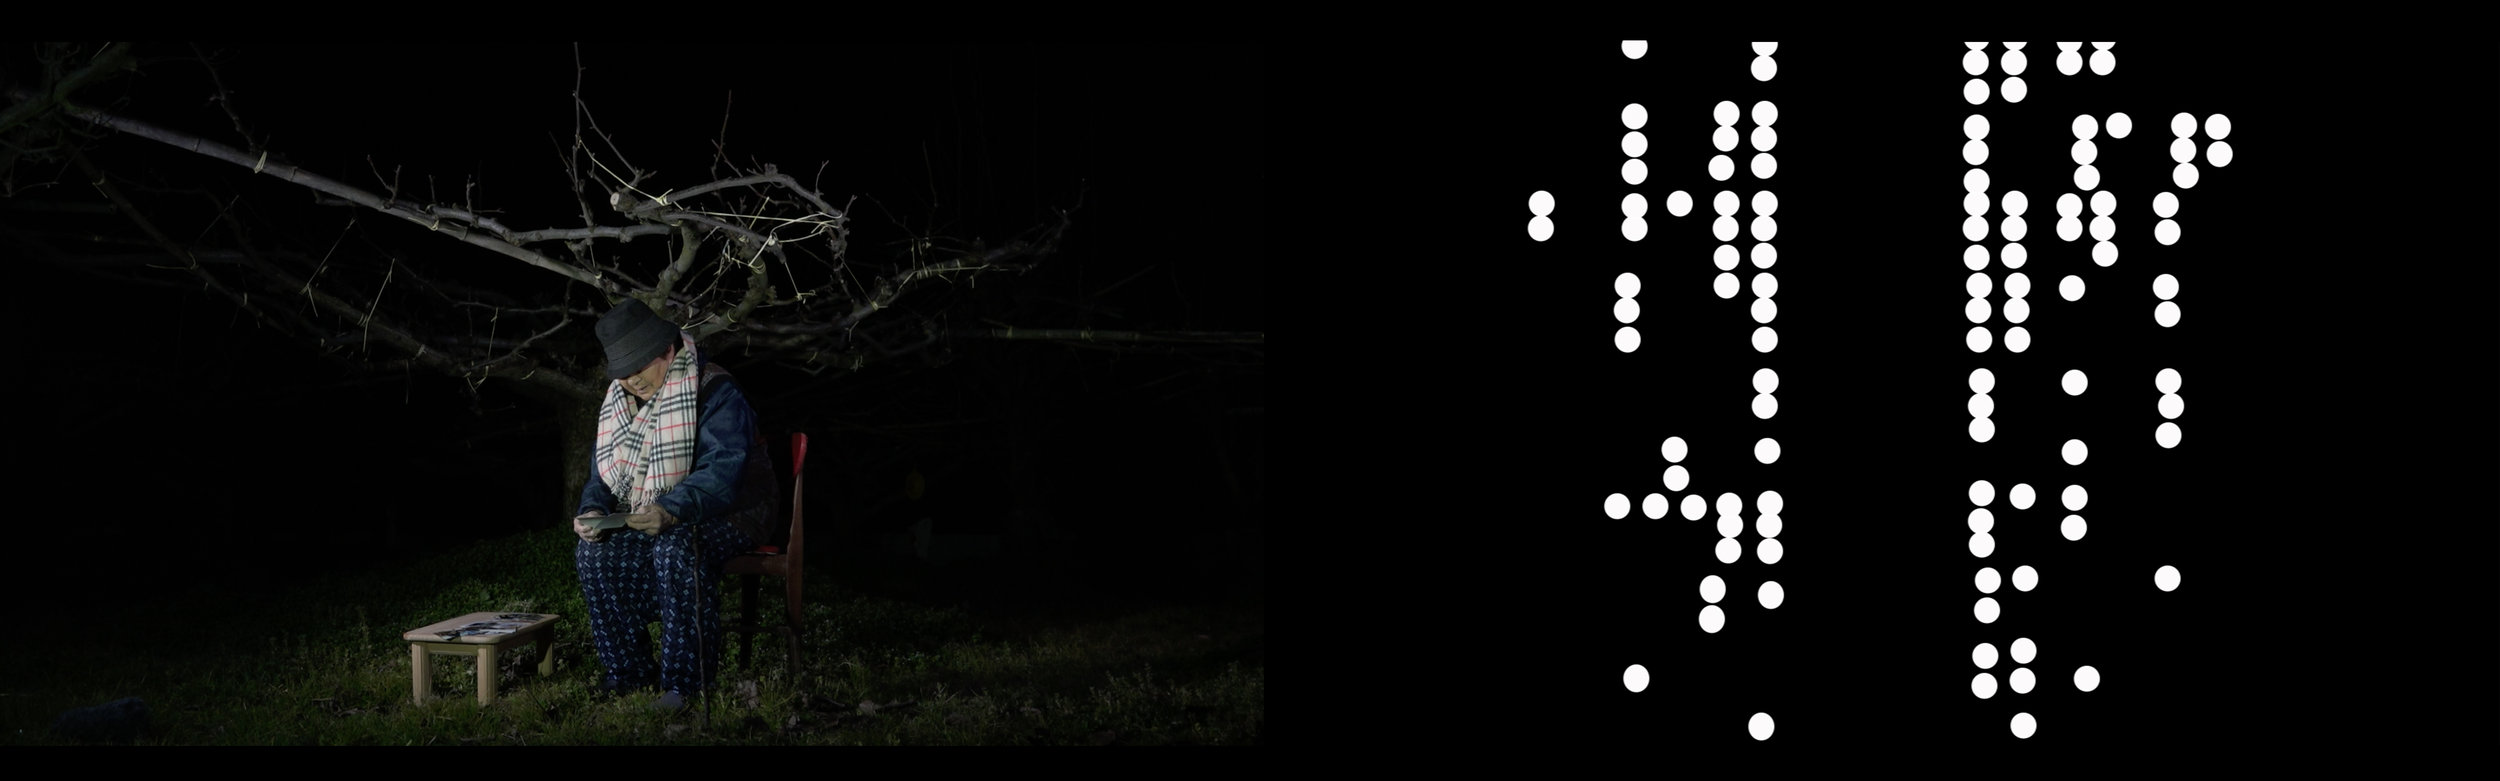  &lt;平成三十一年二月秋芳梨樹&gt; 雙頻道影片  &lt;Syuho Pear Tree in Heisei 31th, February.&gt; 2-Channel Videos.   